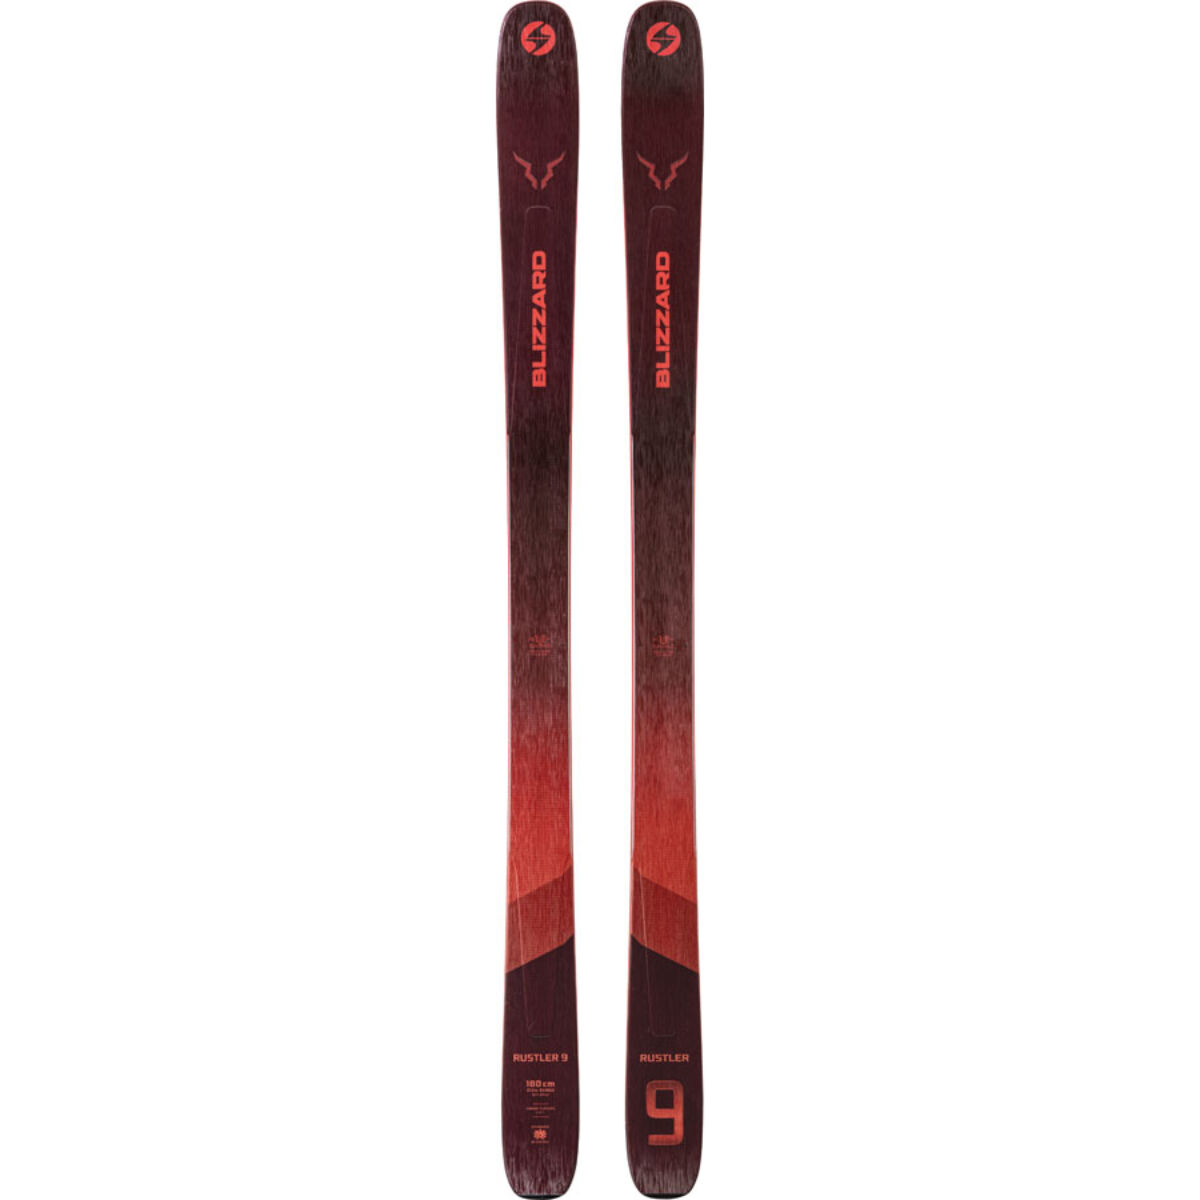 Blizzard Rustler 9 Skis | Christy Sports